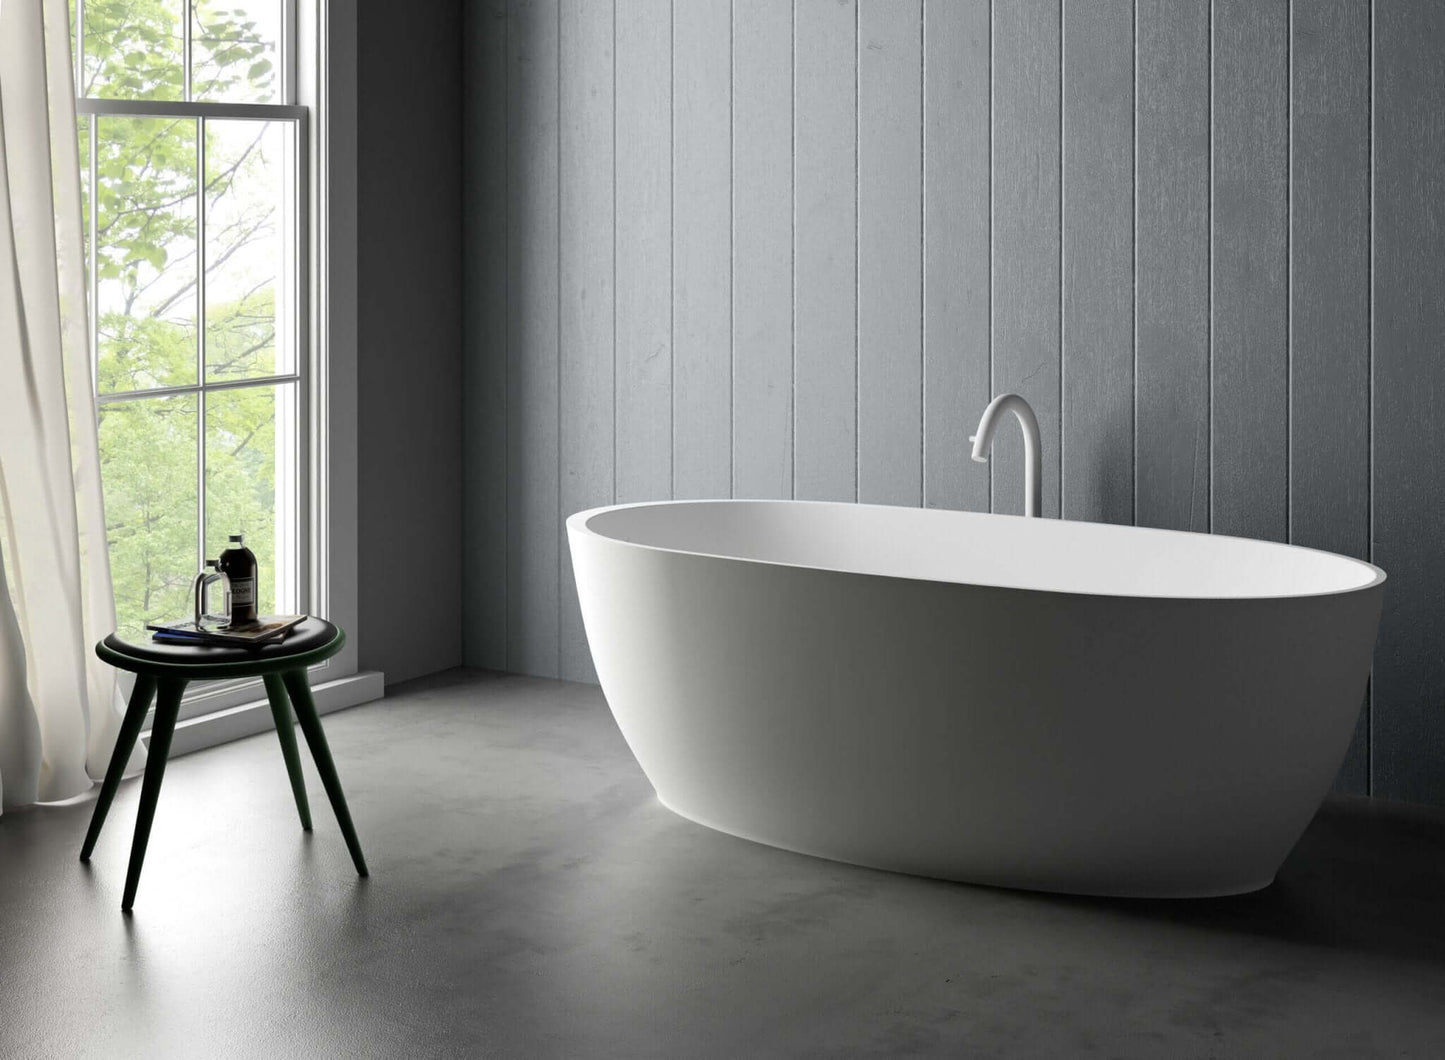 Ruvati White Canali epiStone Oval Freestanding Bath Tub - In Minimalistic Bathroom